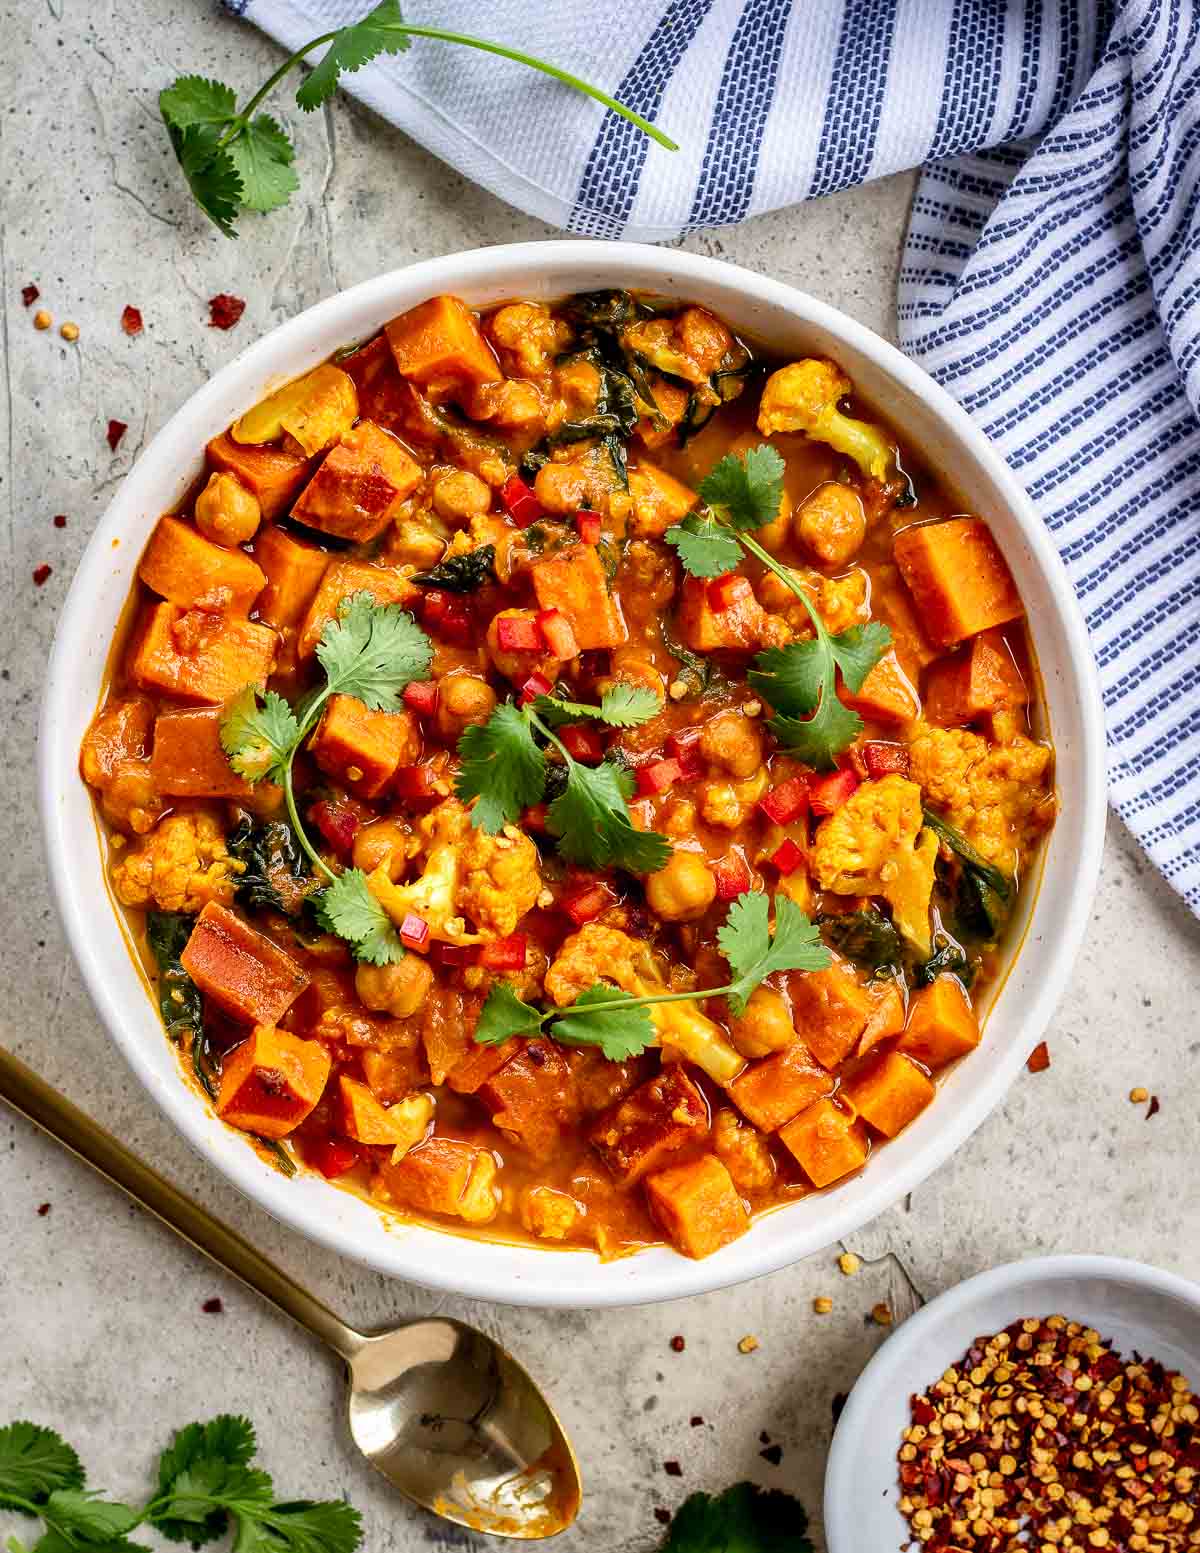 Quick Vegan Meals in 20 minutes ebook - sweet potato & cauliflower curry